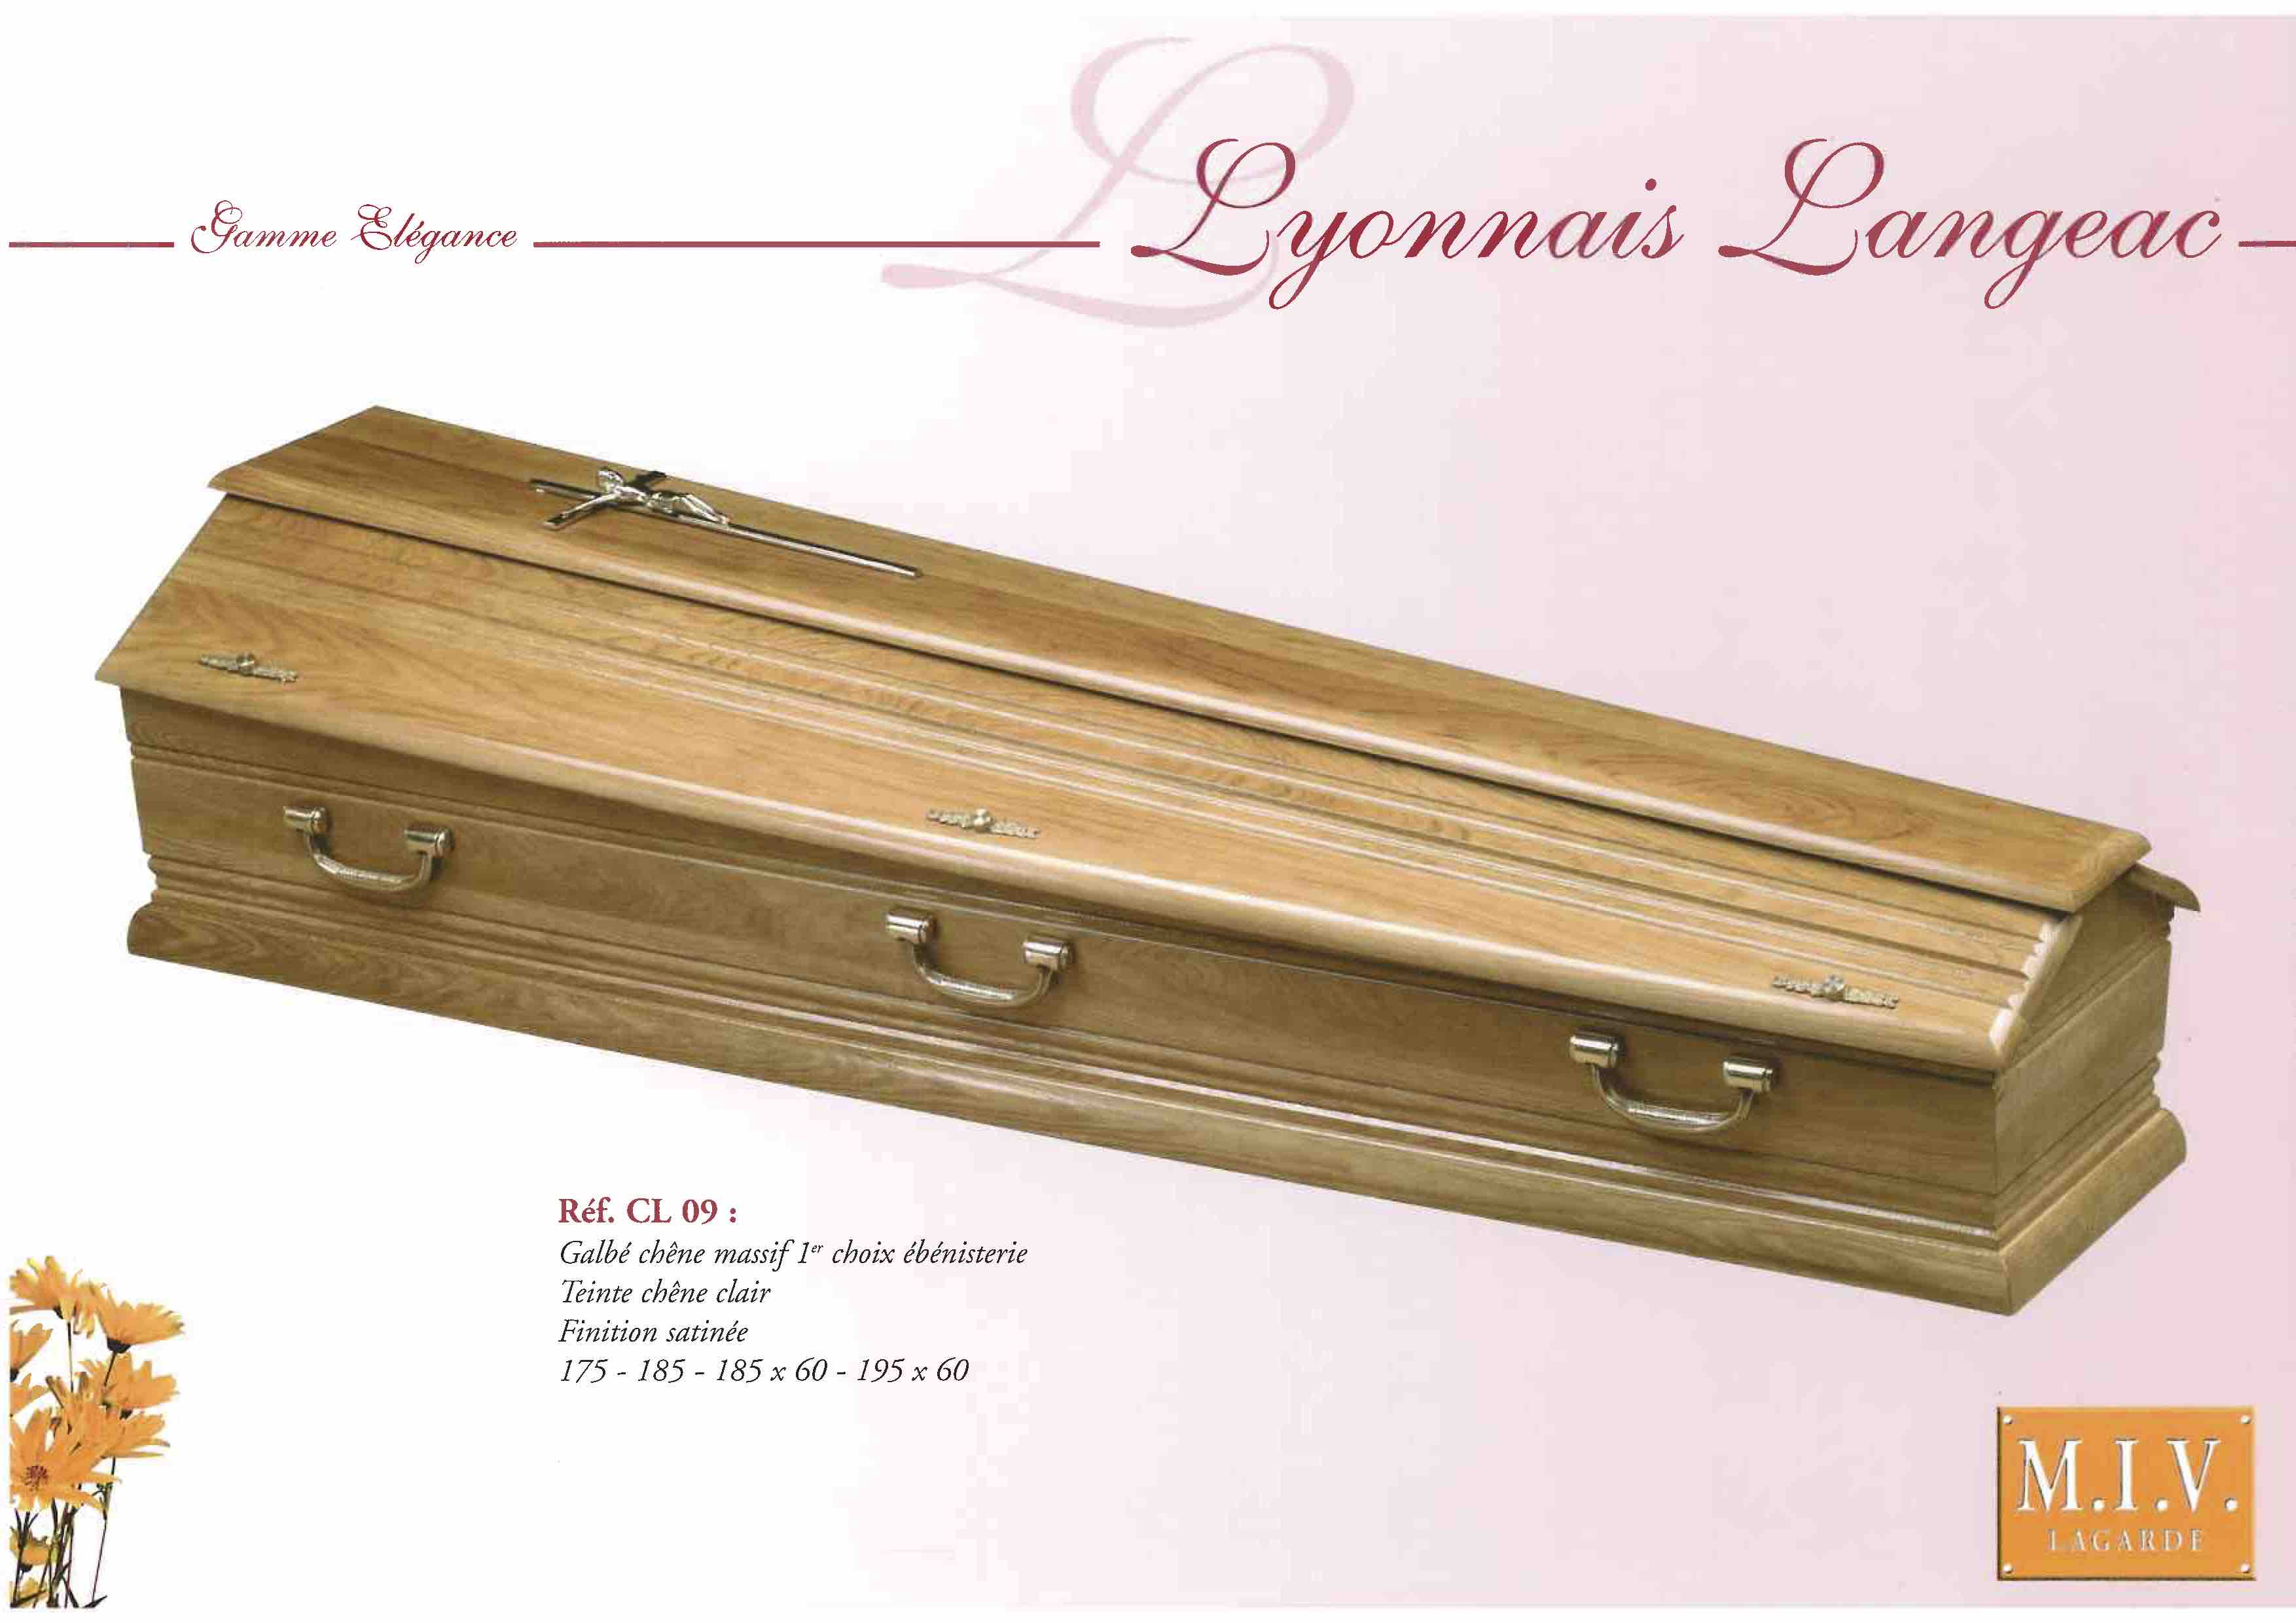 cercueil-inhumation-lyonnais-langeac